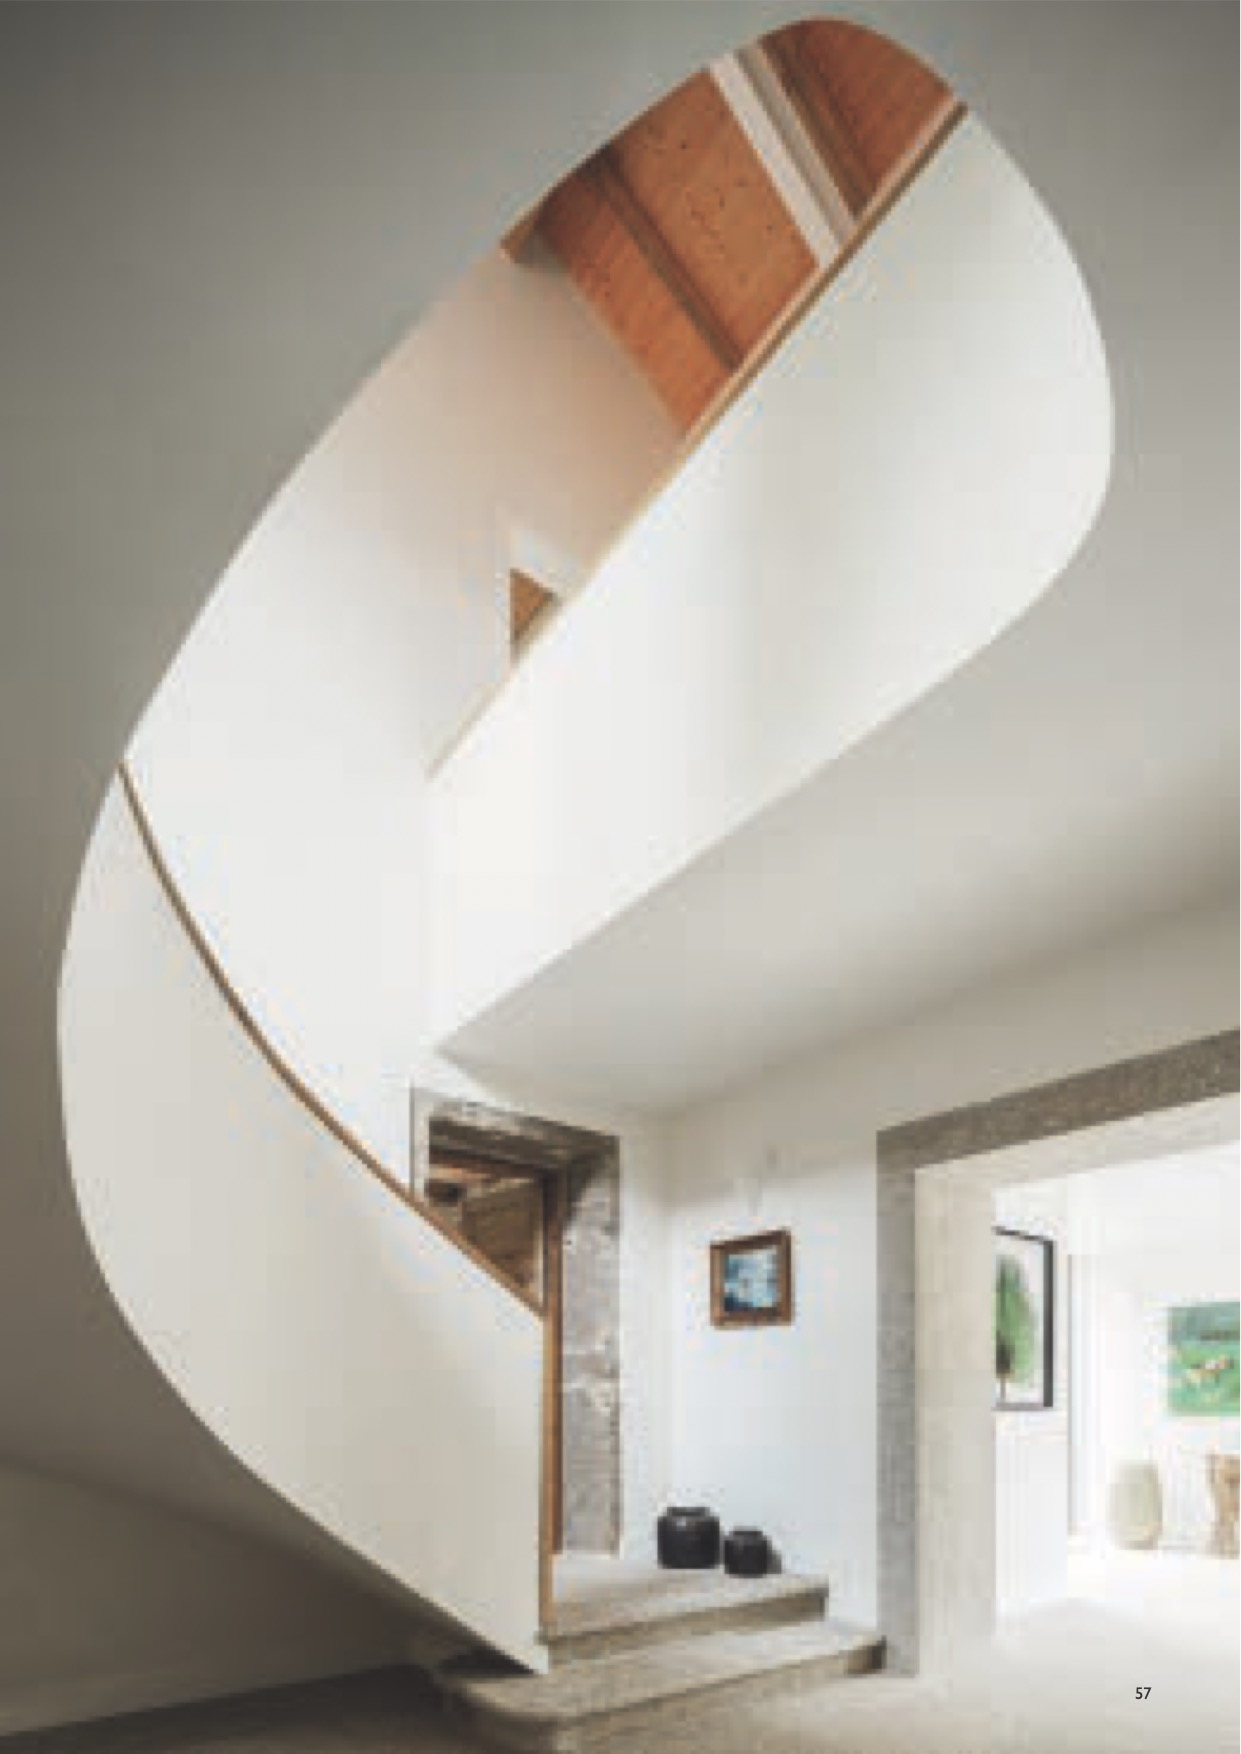 Vip Interiores #65 do atelier Ren Ito com fotografia arquitetura de ivo tavares studio - architectural photography